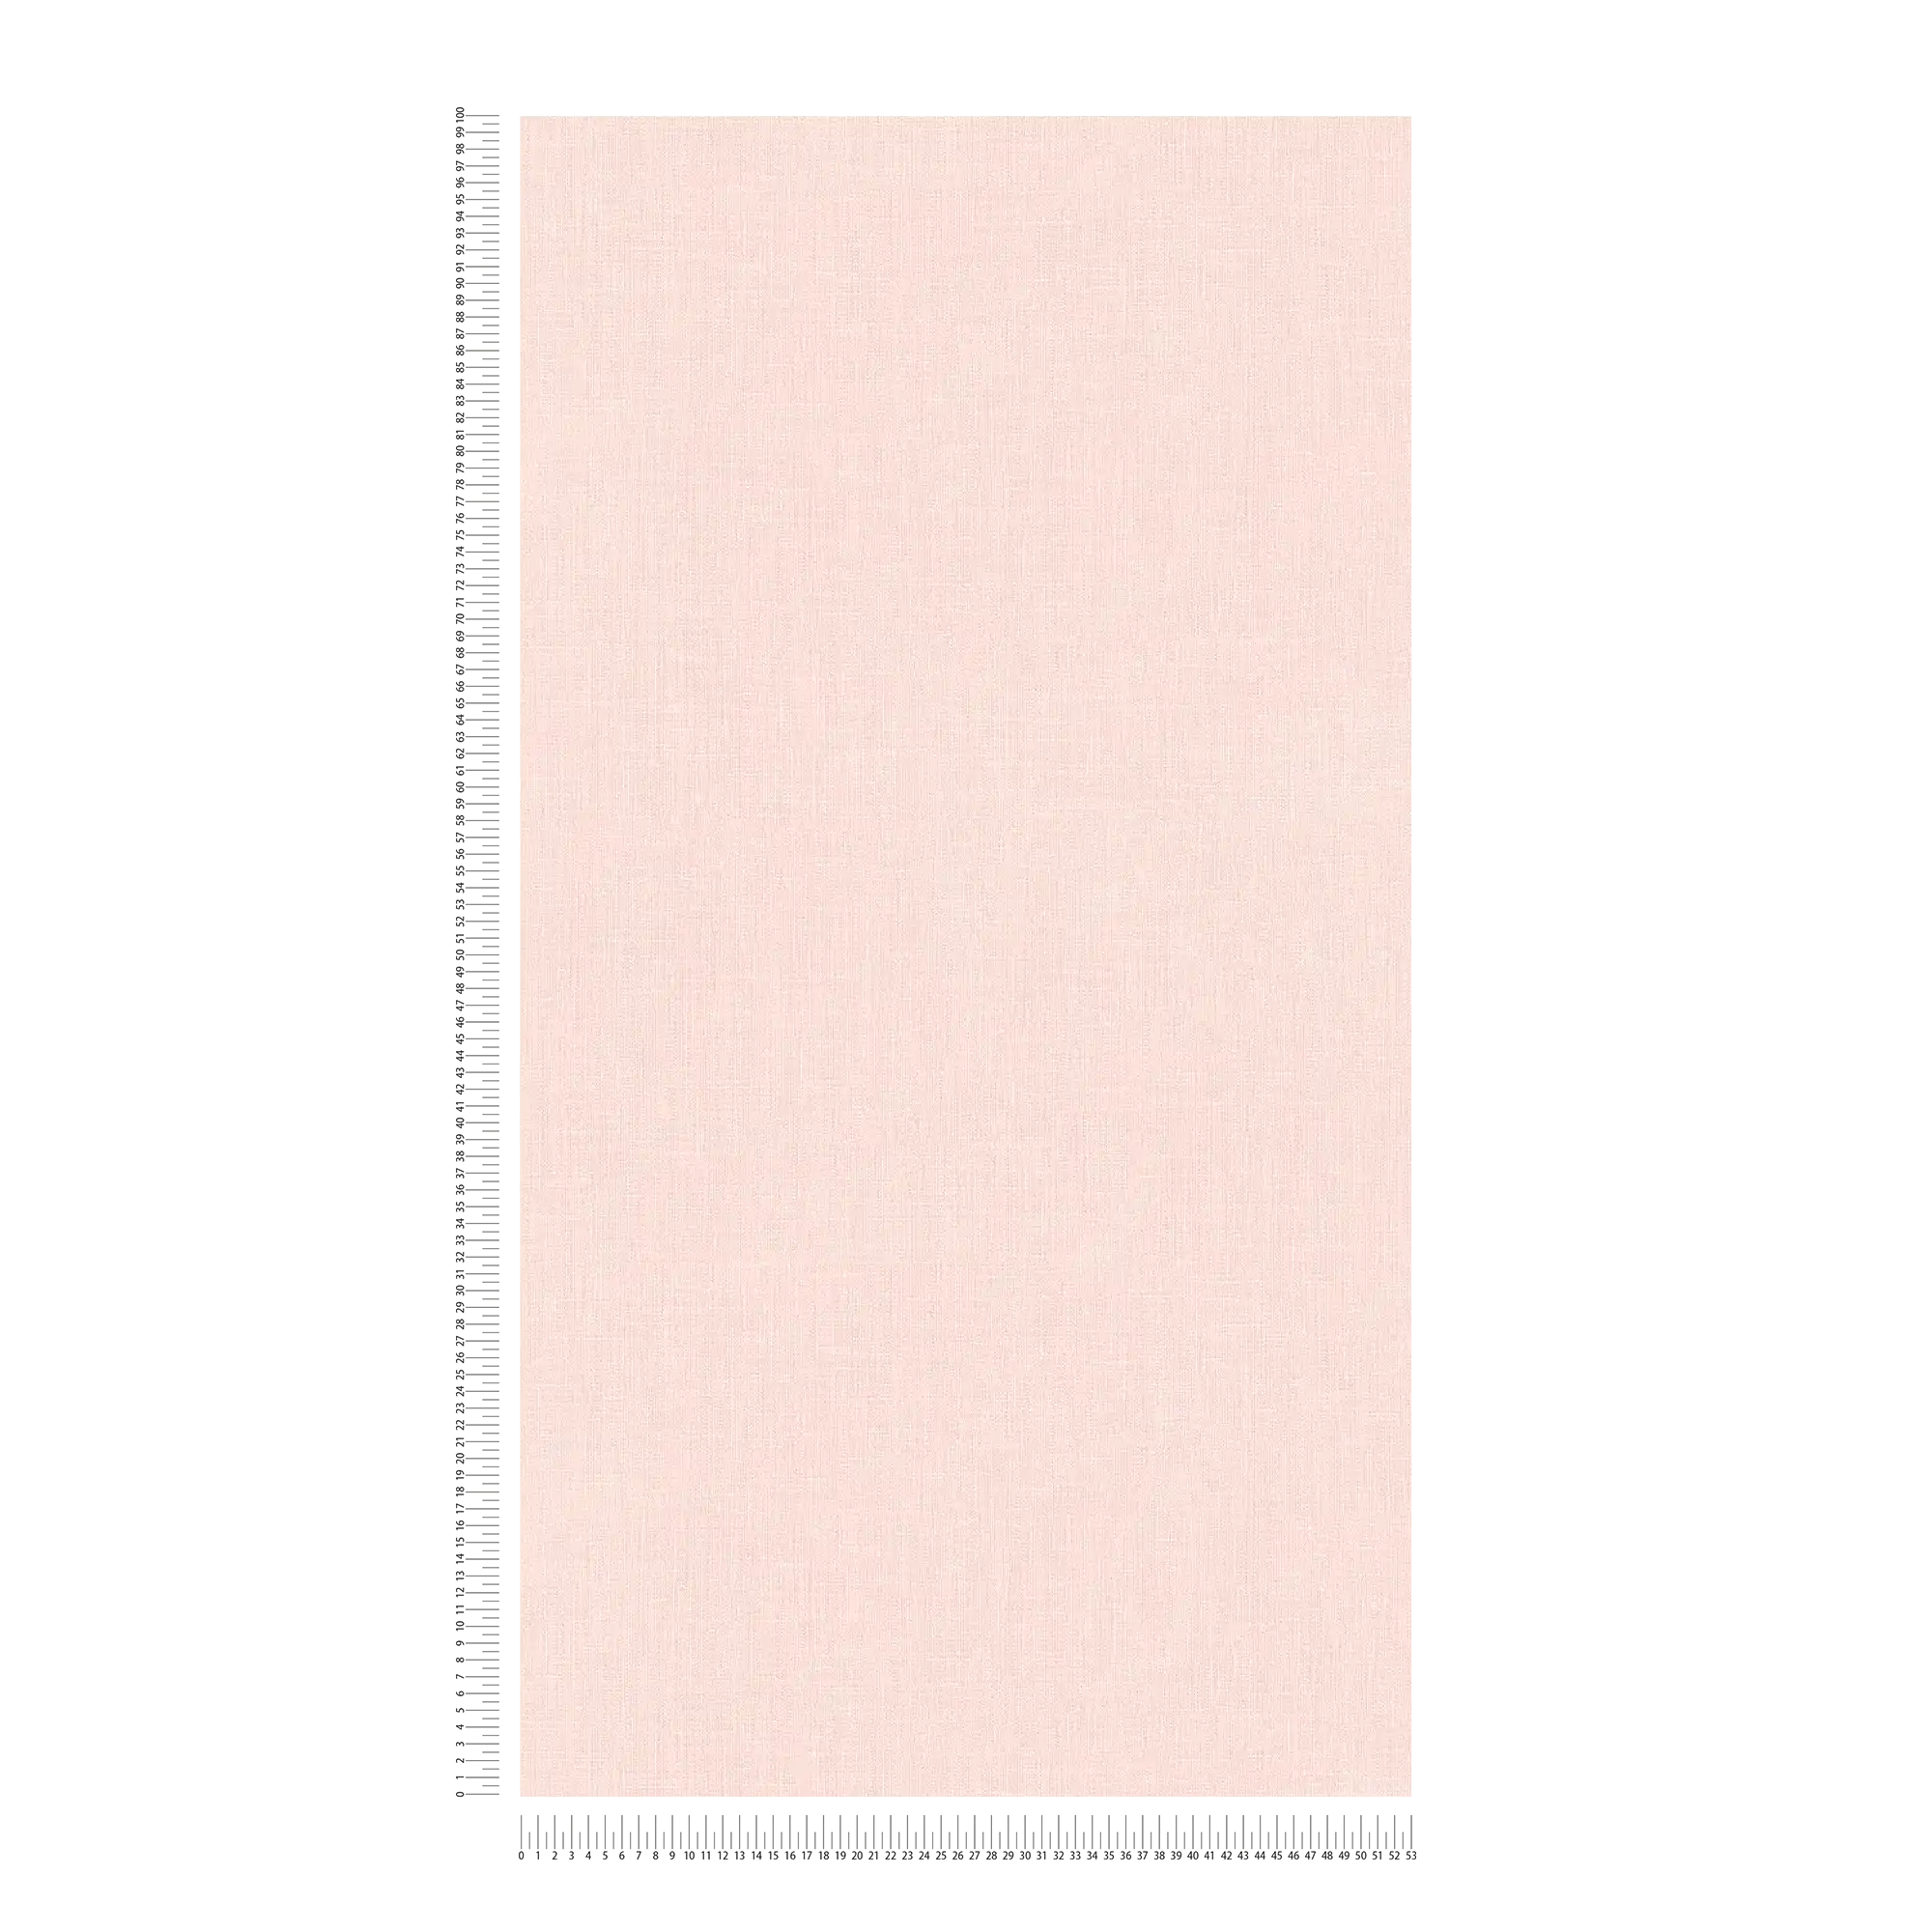             Papel pintado rosa estructura de lino liso pastel
        